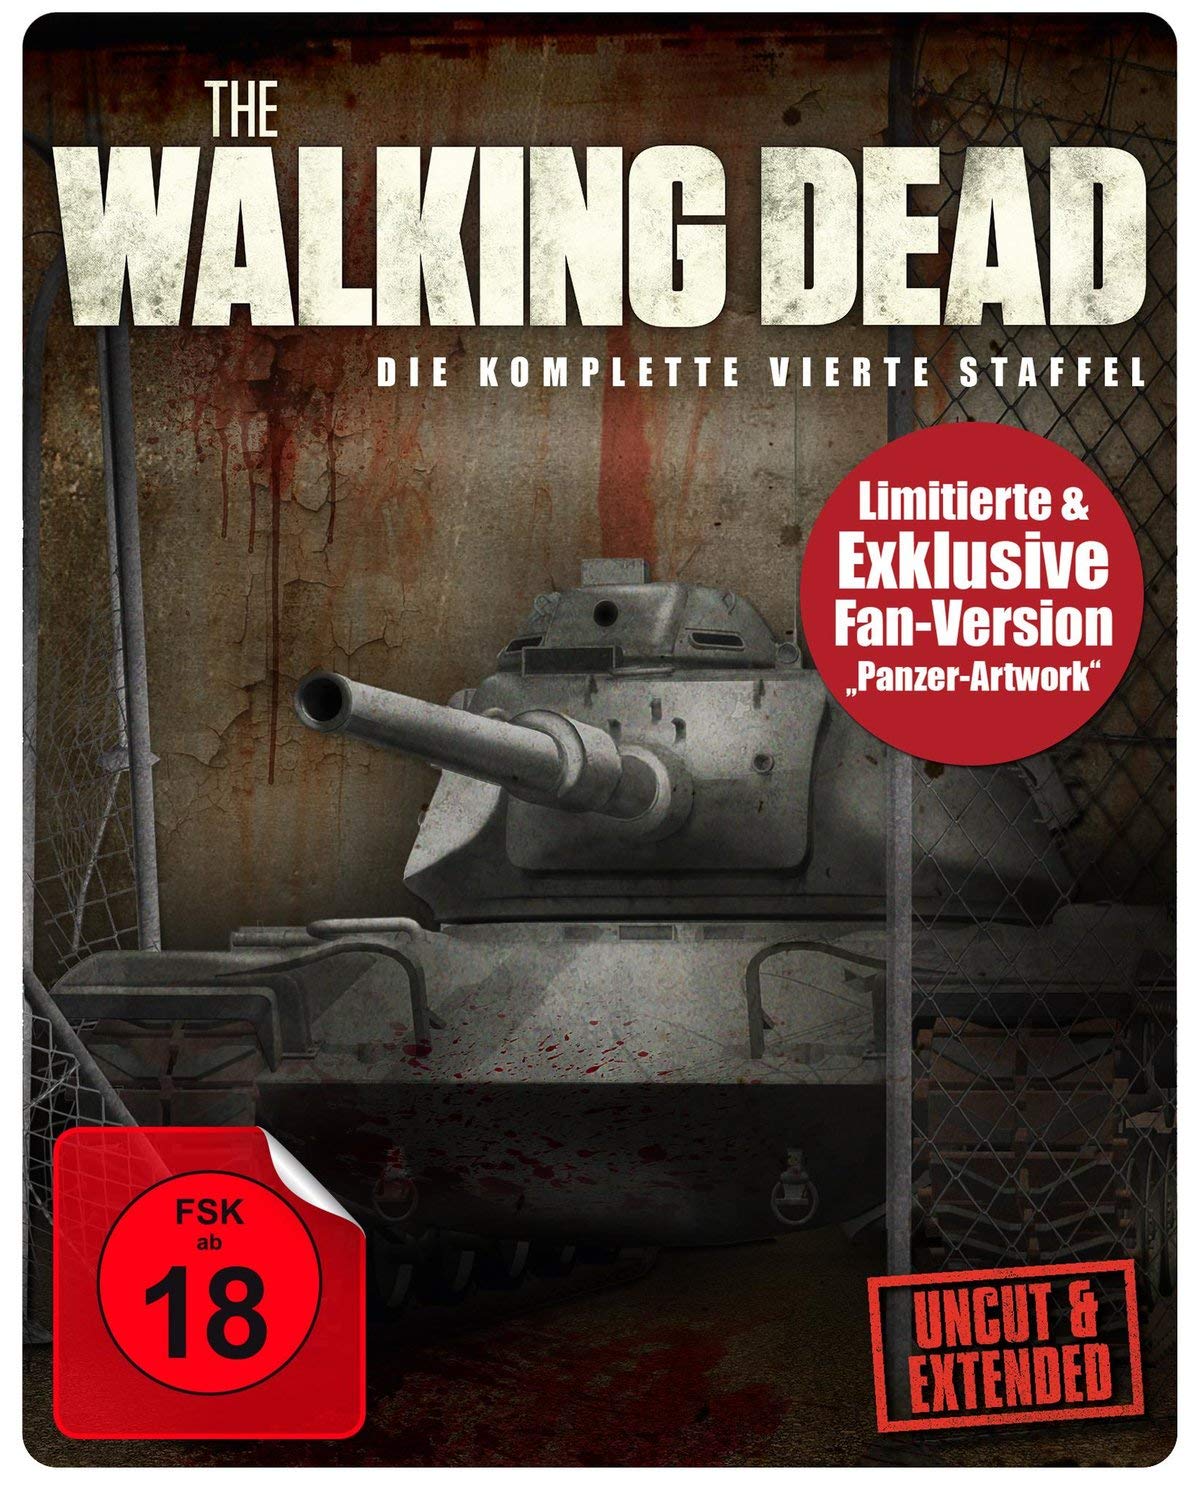 The Walking Dead - Die komplette vierte Staffel - UNCUT & EXTENDED - Limited STEELBOOK [Blu-ray]